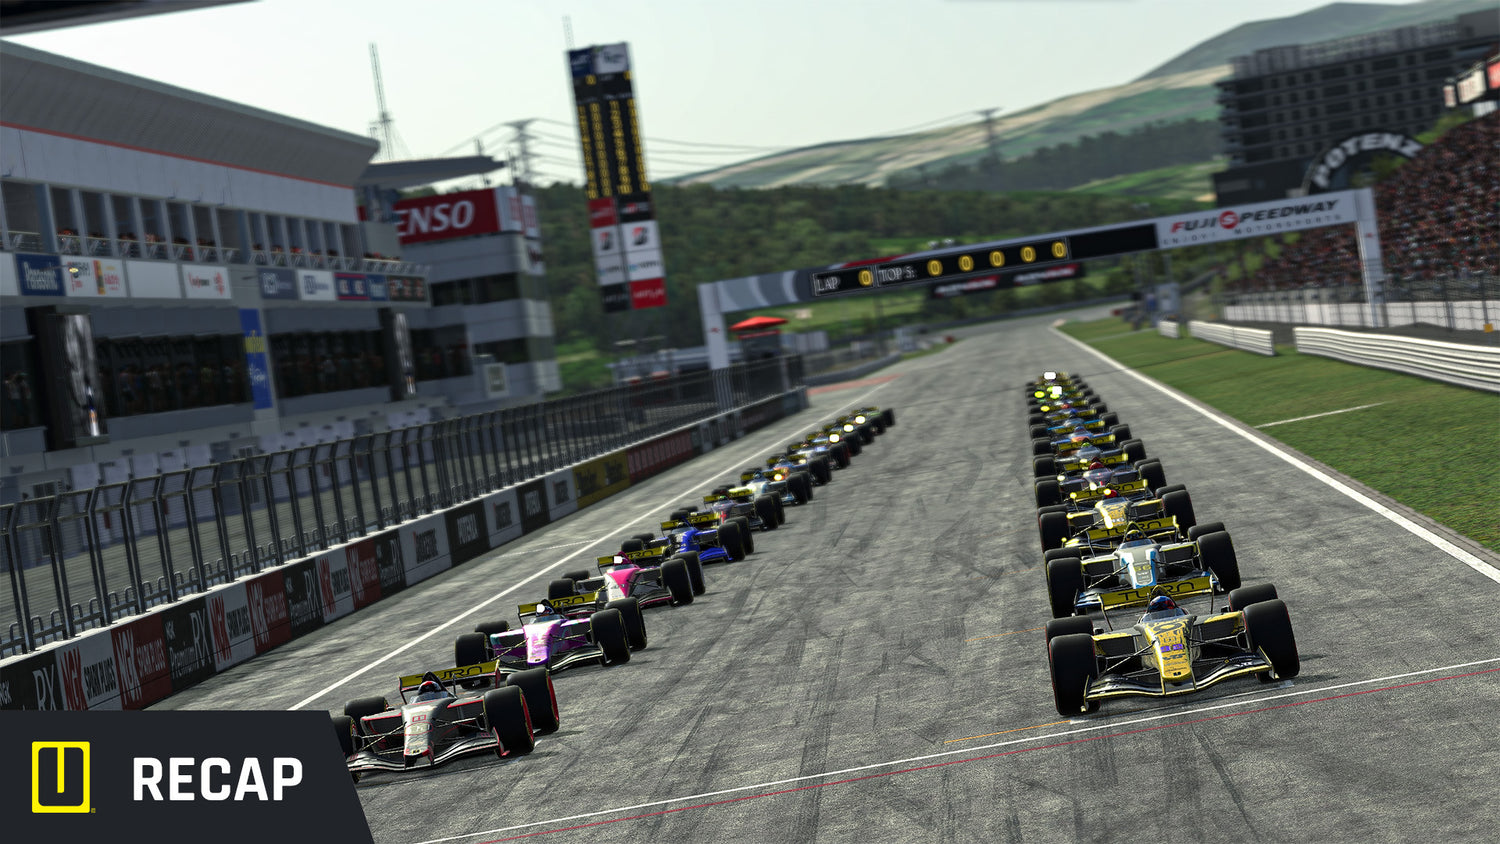 Grand Prix Turn Racing iRacing Series Race 7 Recap